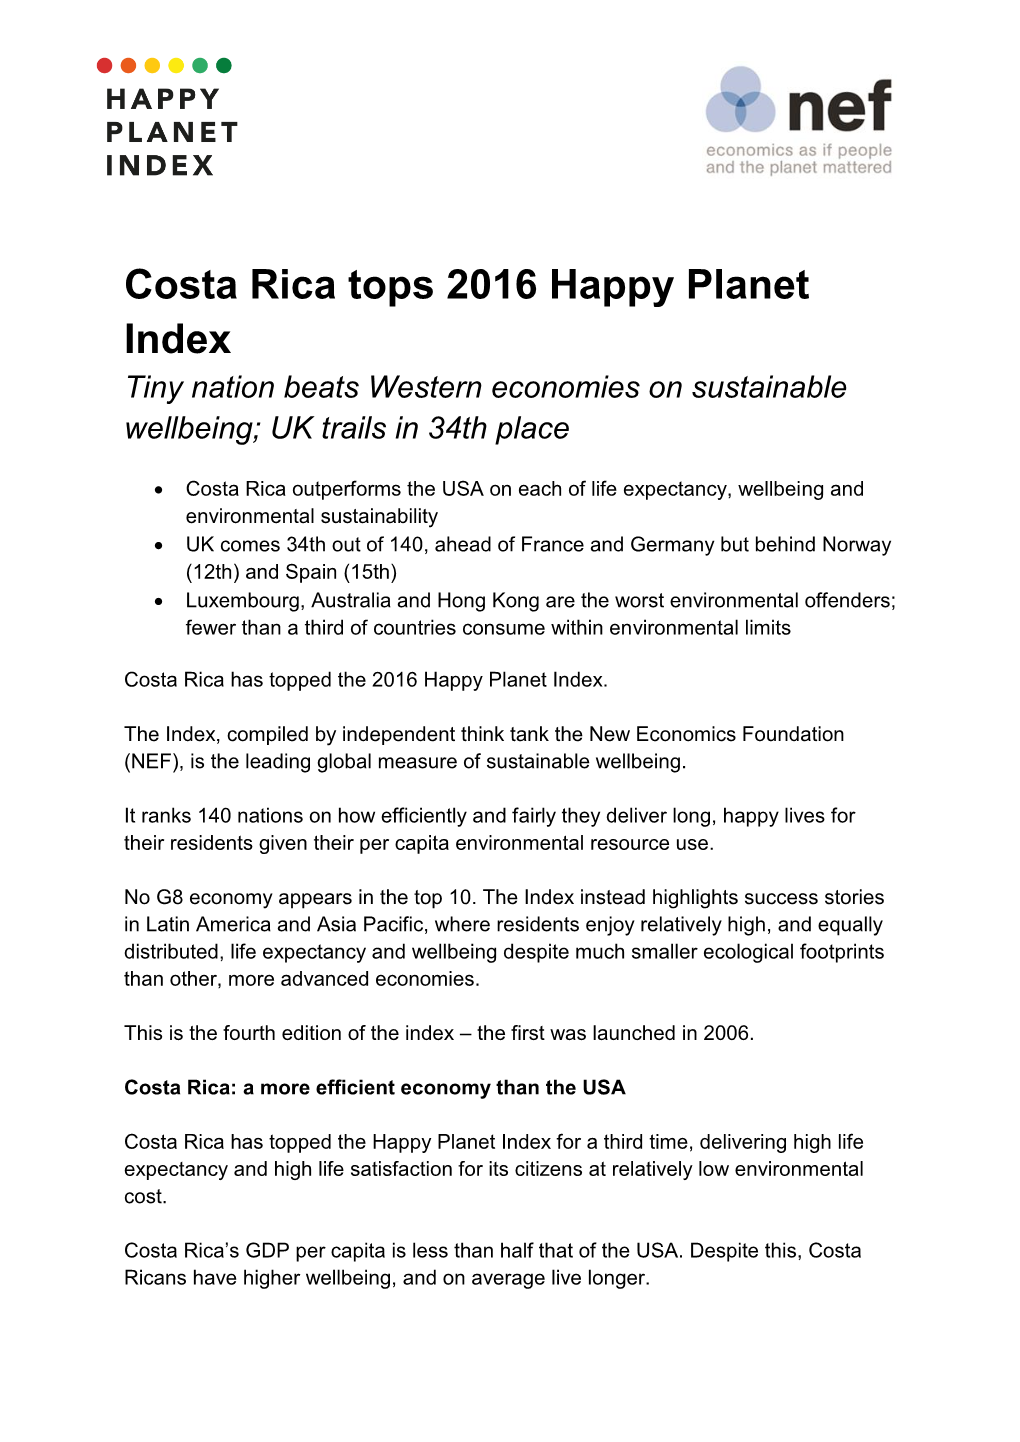 Costa Rica Tops 2016 Happy Planet Index